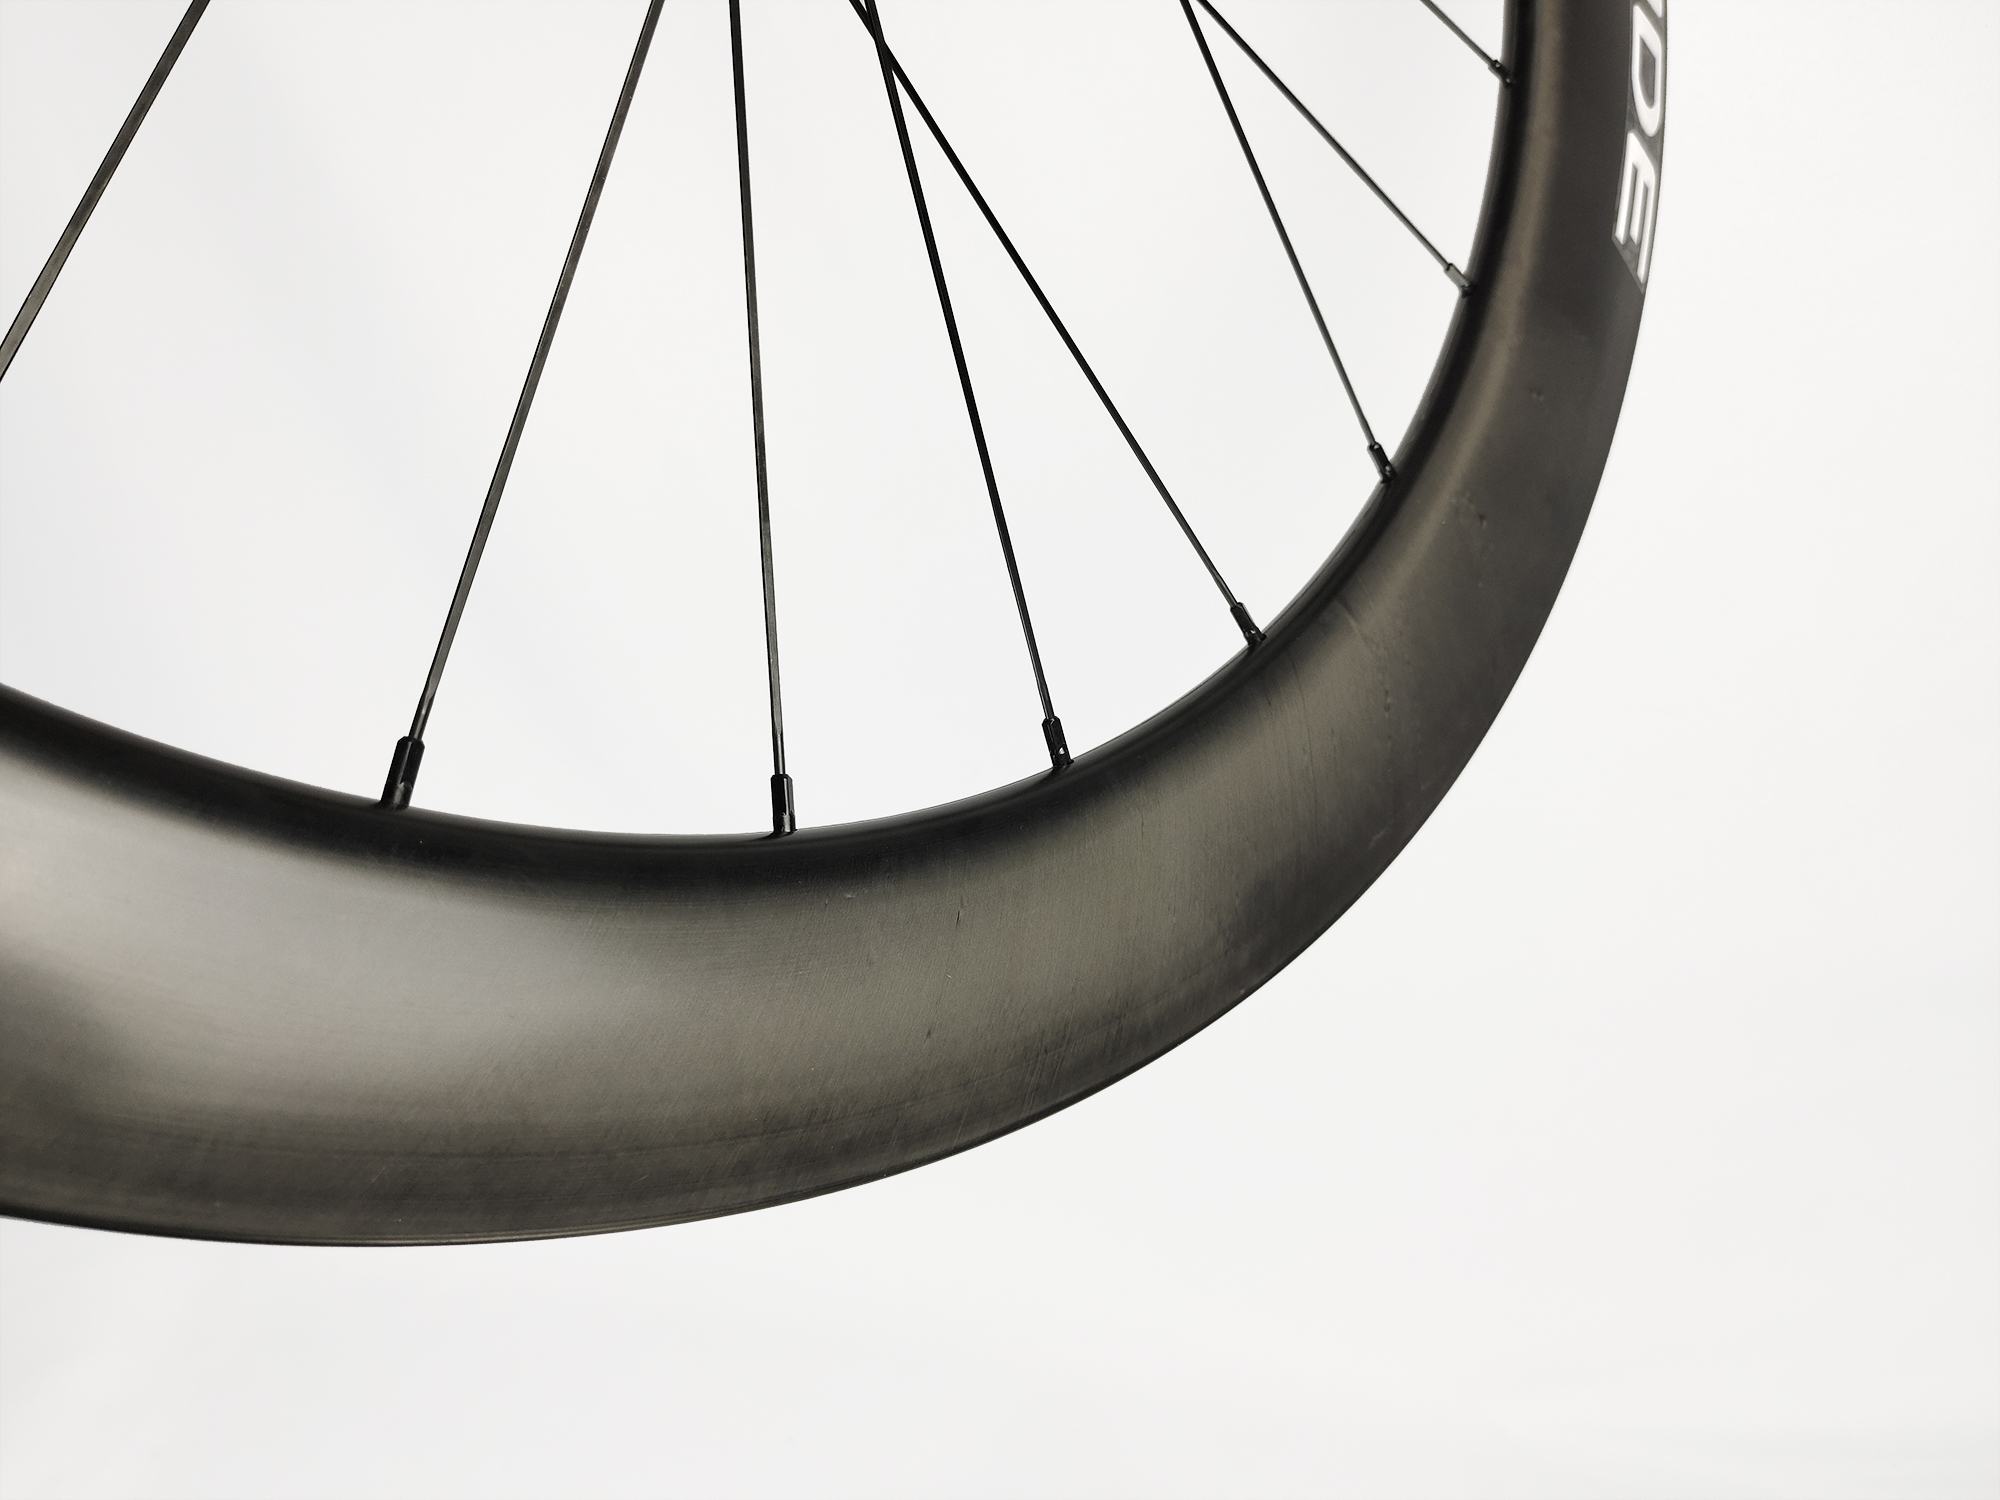 60mm Carbon Gravel Bike Wheelset Clincher Rims Disc Brake Ratchet Wheels 60mm Carbon Fiber Clincher Wheelset 28mm Wide Disc Brake Ratchet Hub